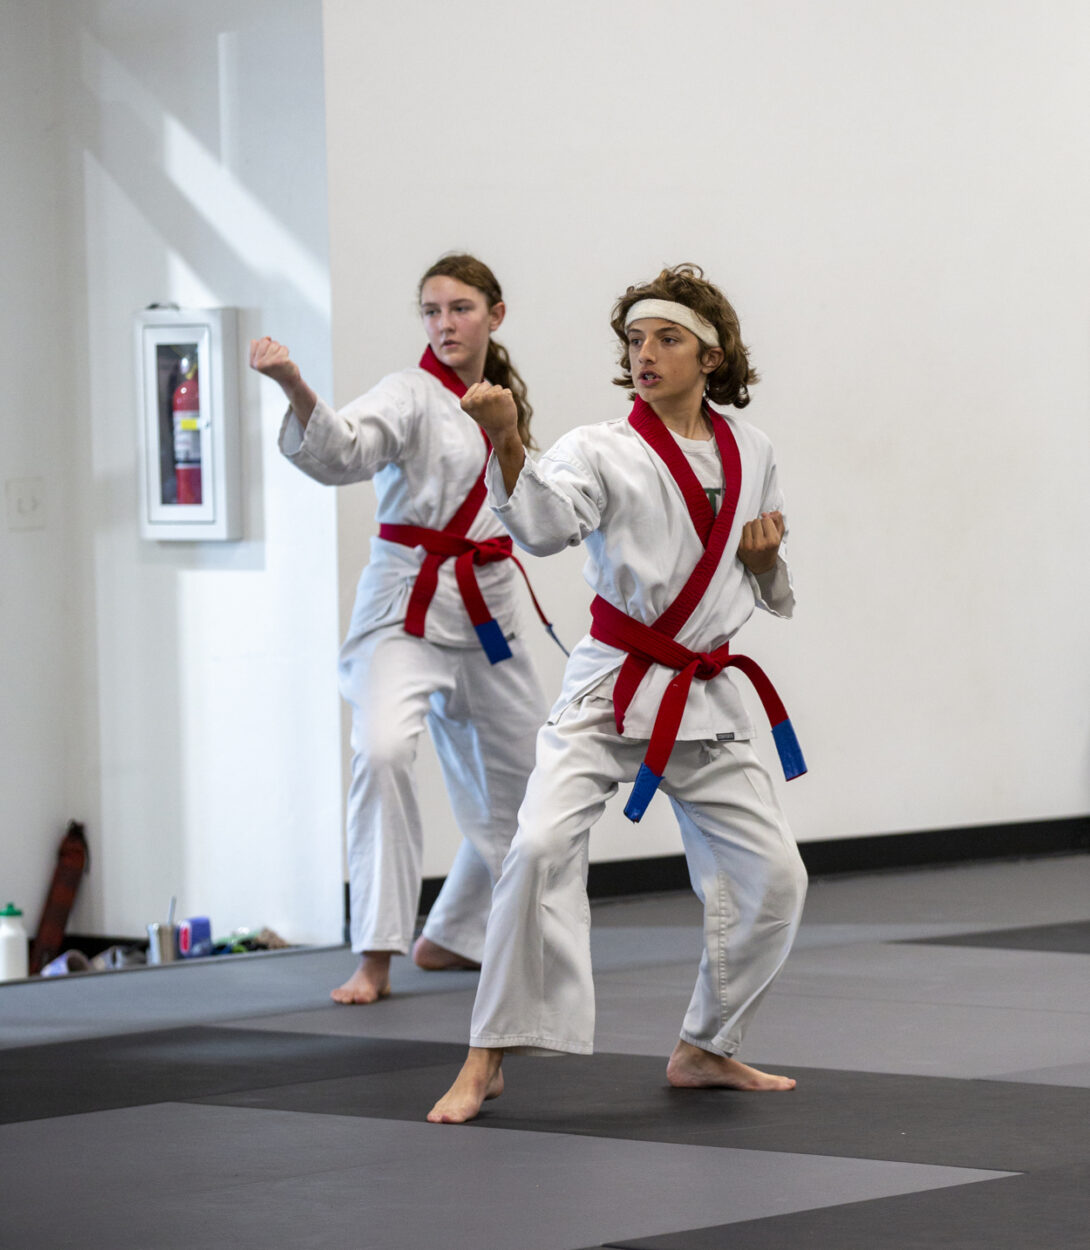 Christian Karate & Jiu-Jitsu Academy Core Program